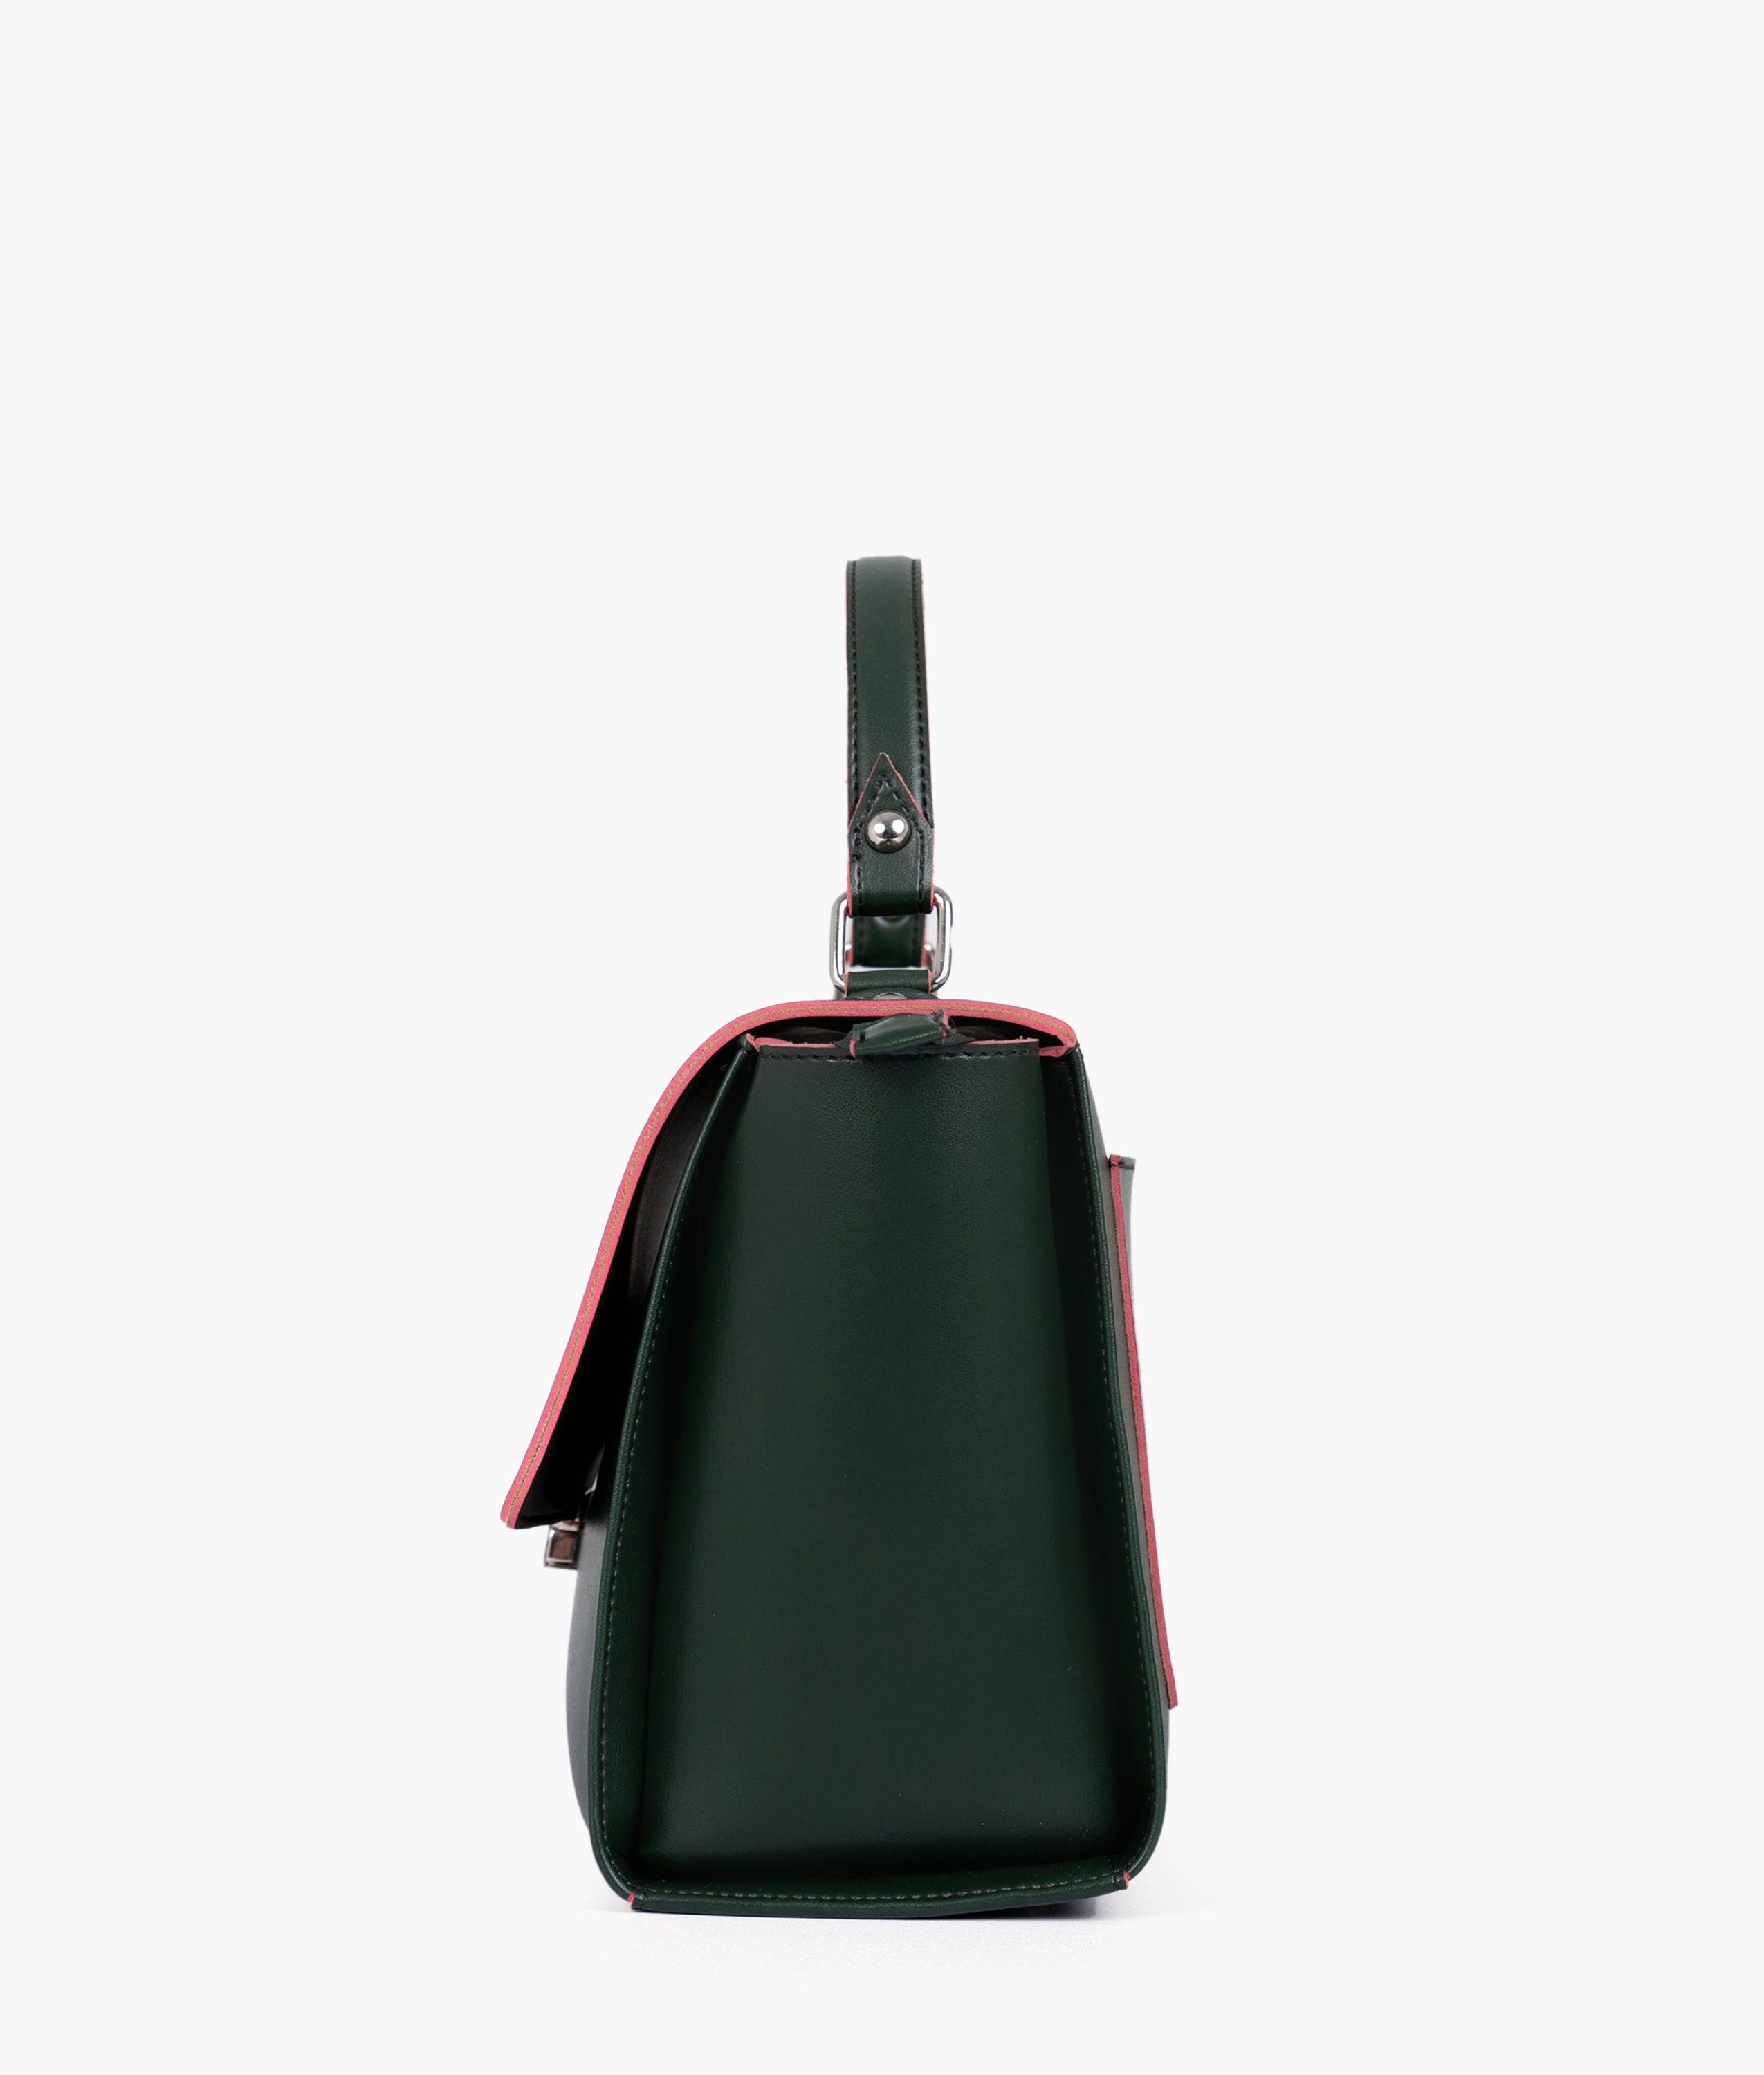 Army green mini messenger bag